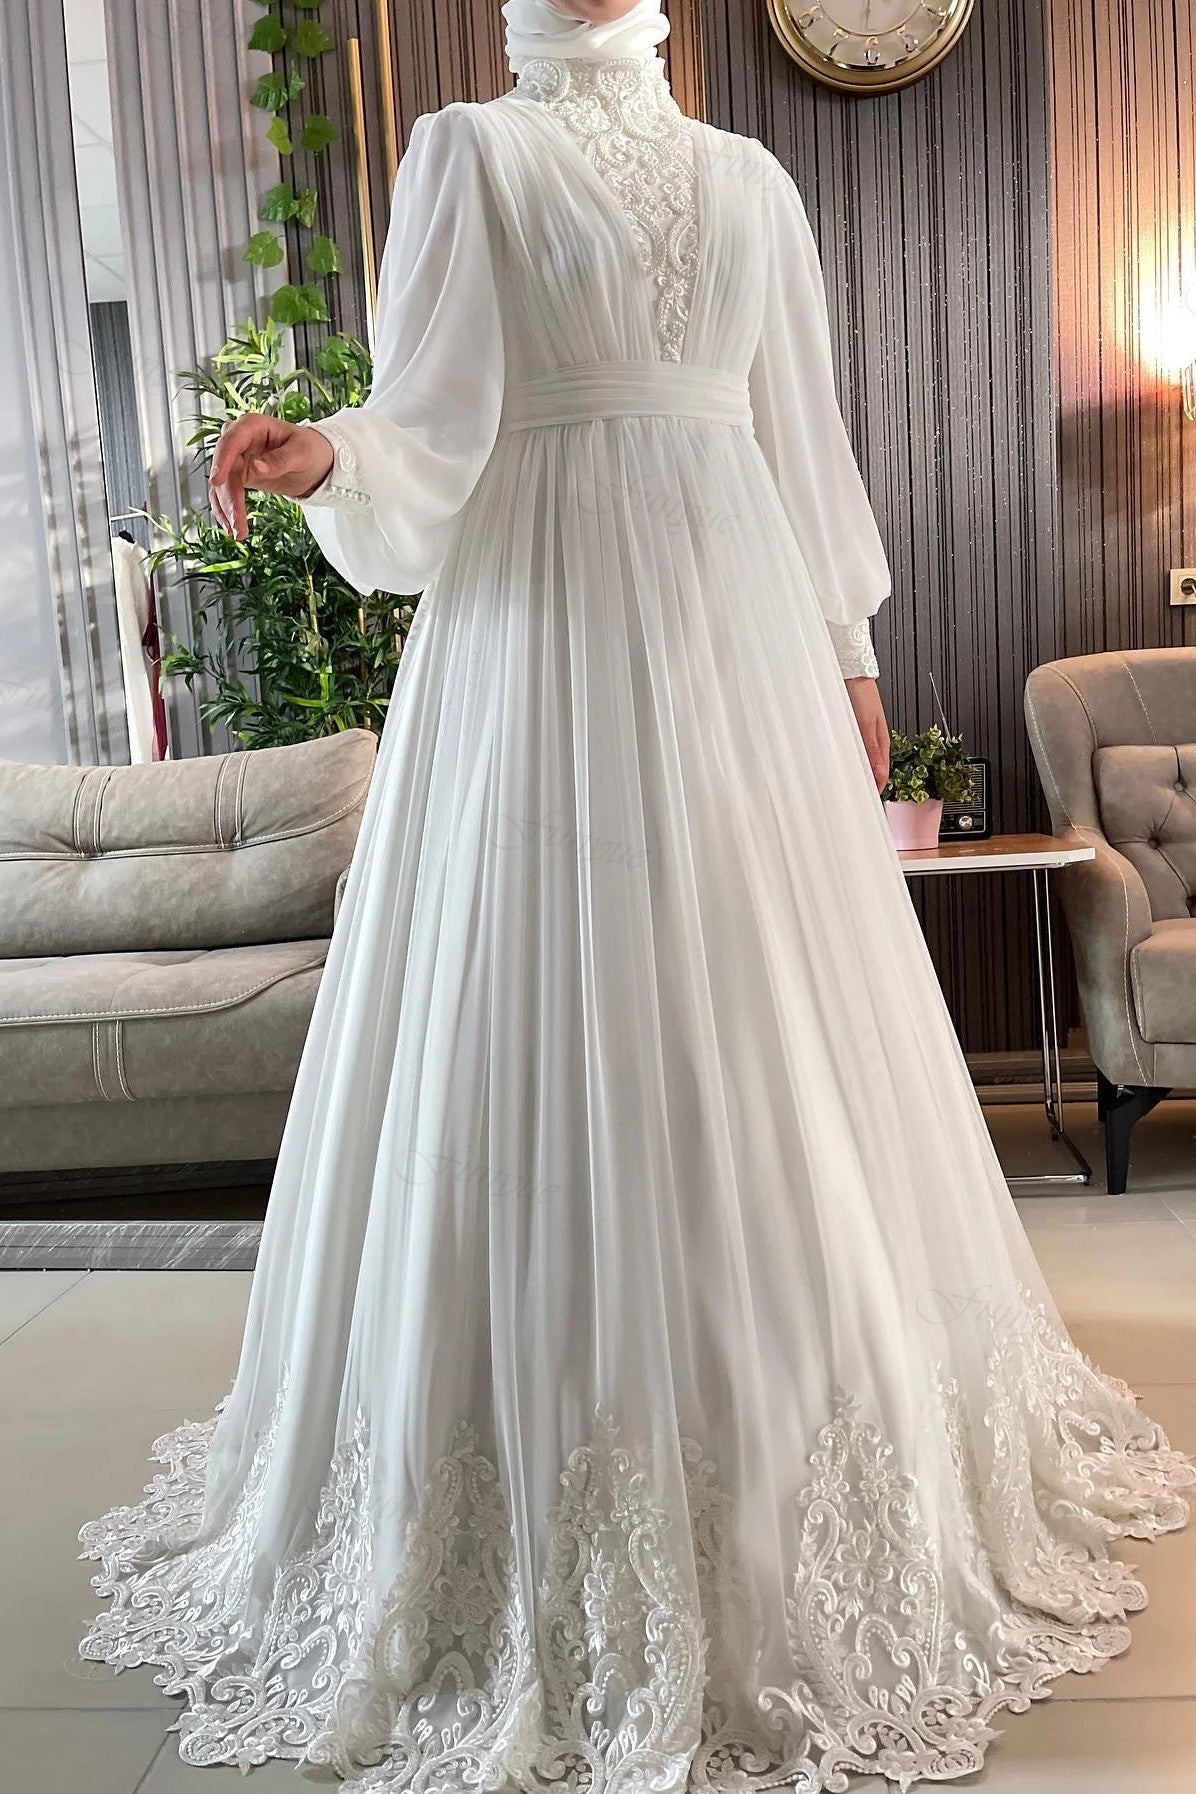 Million dirham gowns: 10 of Michael Cinco's most extravagant wedding dresses